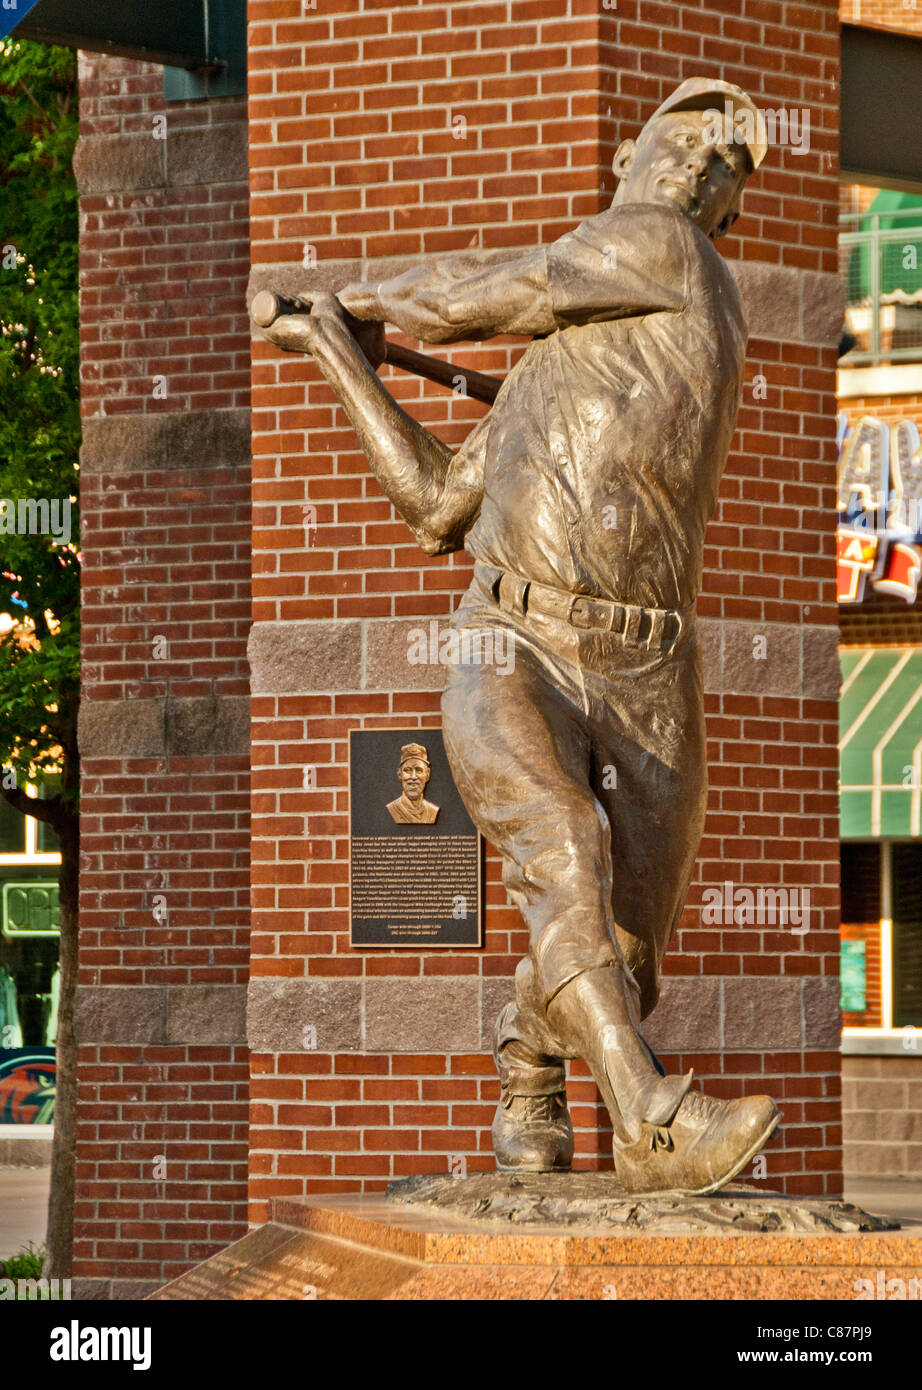 Baseball legend, Mickey Mantle, AT&T Bricktown Ballpark in Bricktown entertainment district of Oklahoma City, Oklahoma, USA Stock Photo